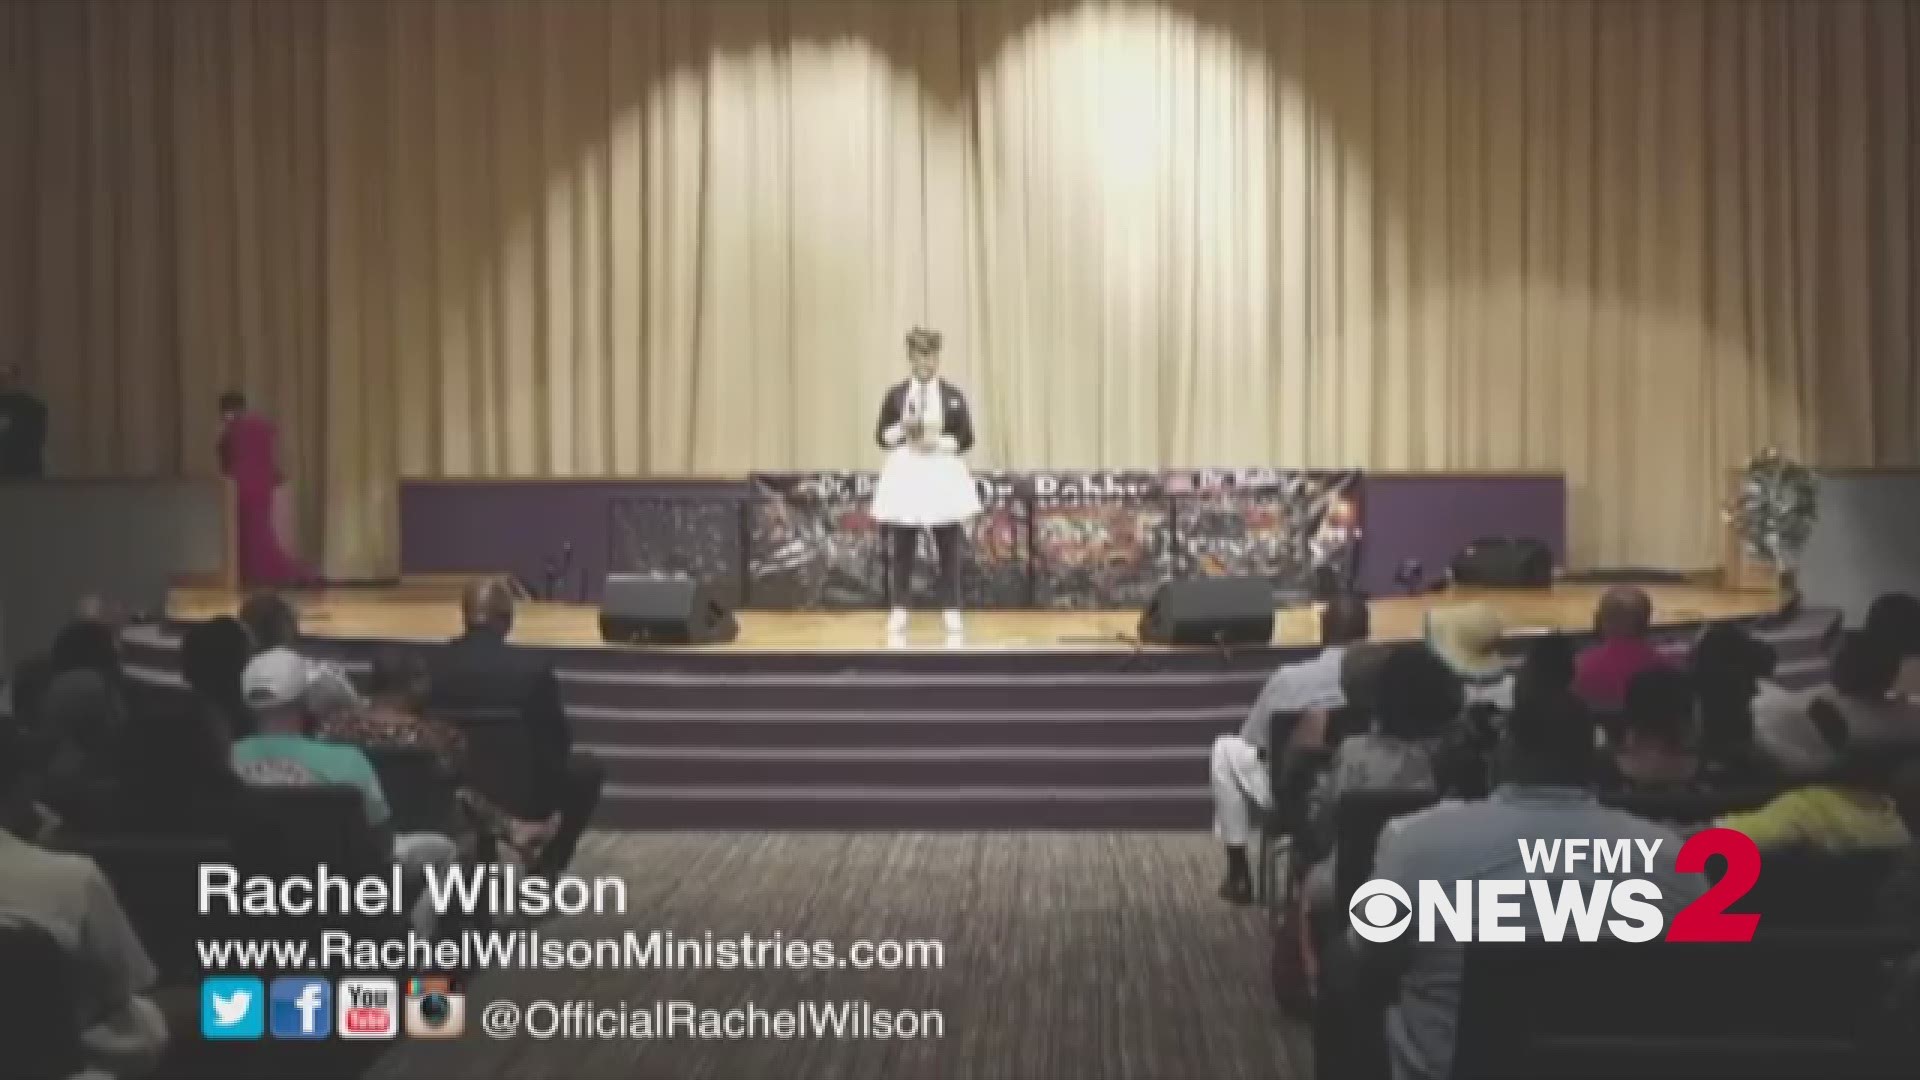 The message of hope in gospel music is Rachel Wilson's guiding light.